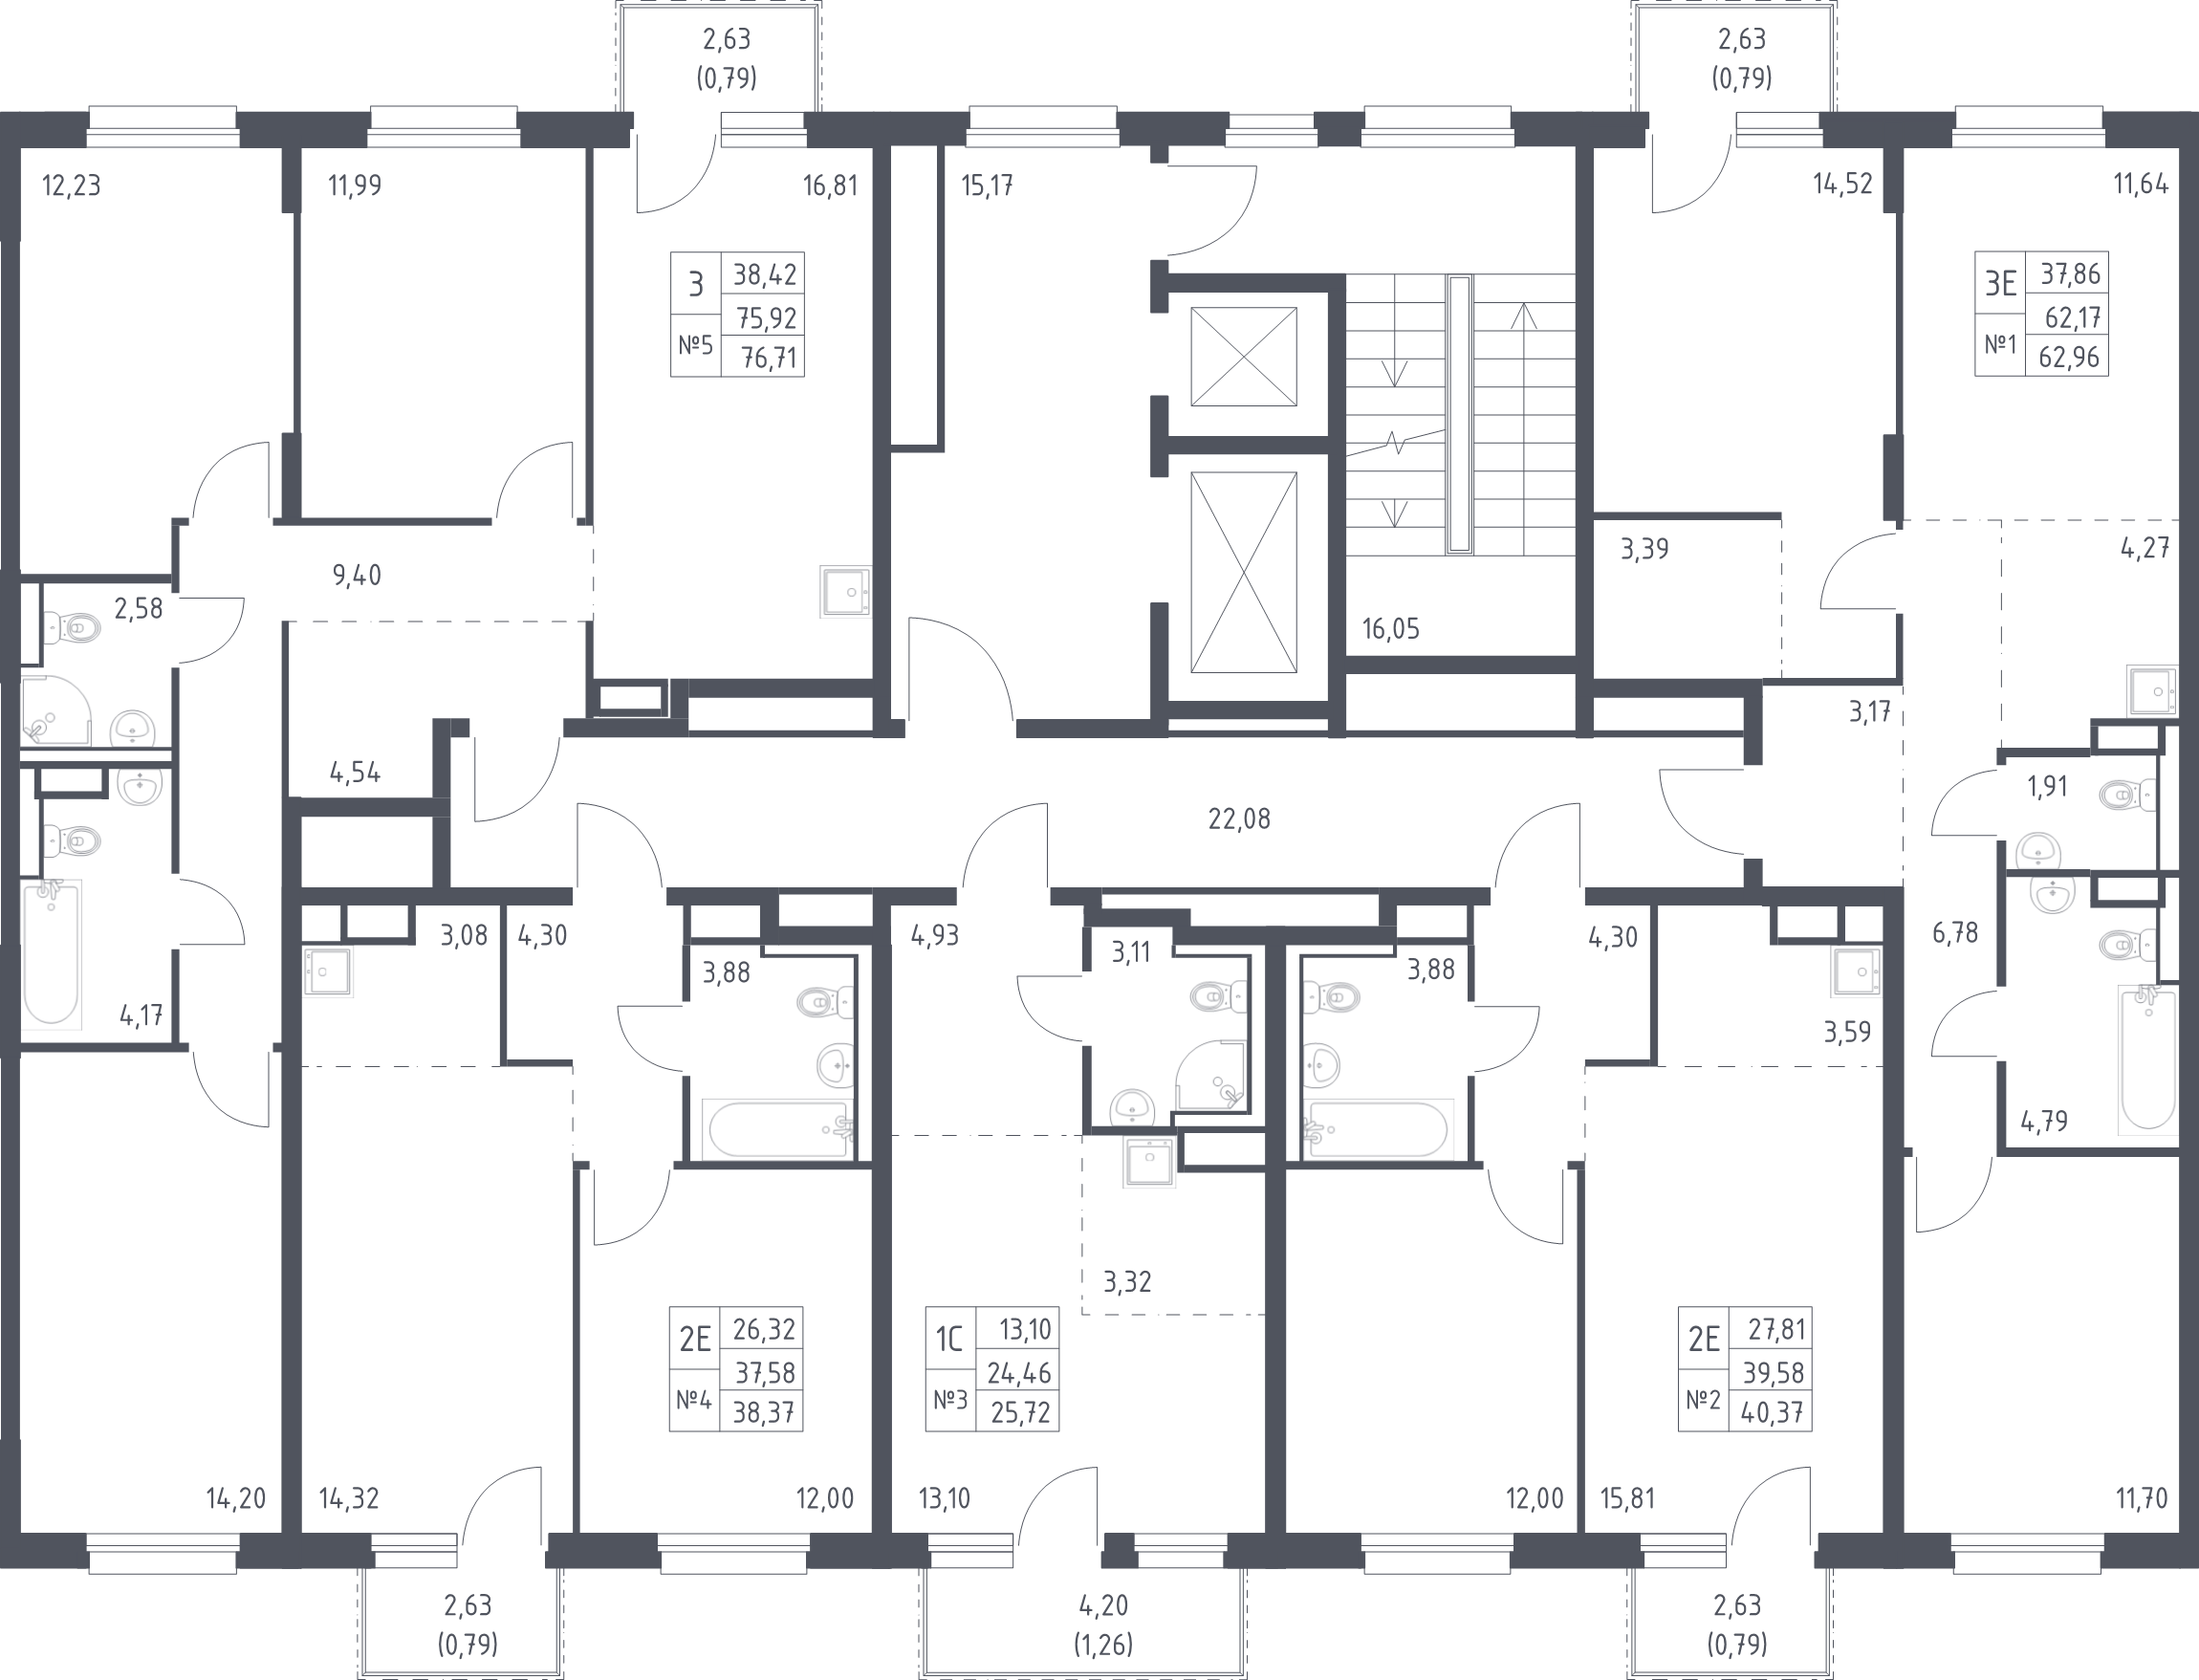 3-комнатная (Евро) квартира, 62.96 м² - планировка этажа